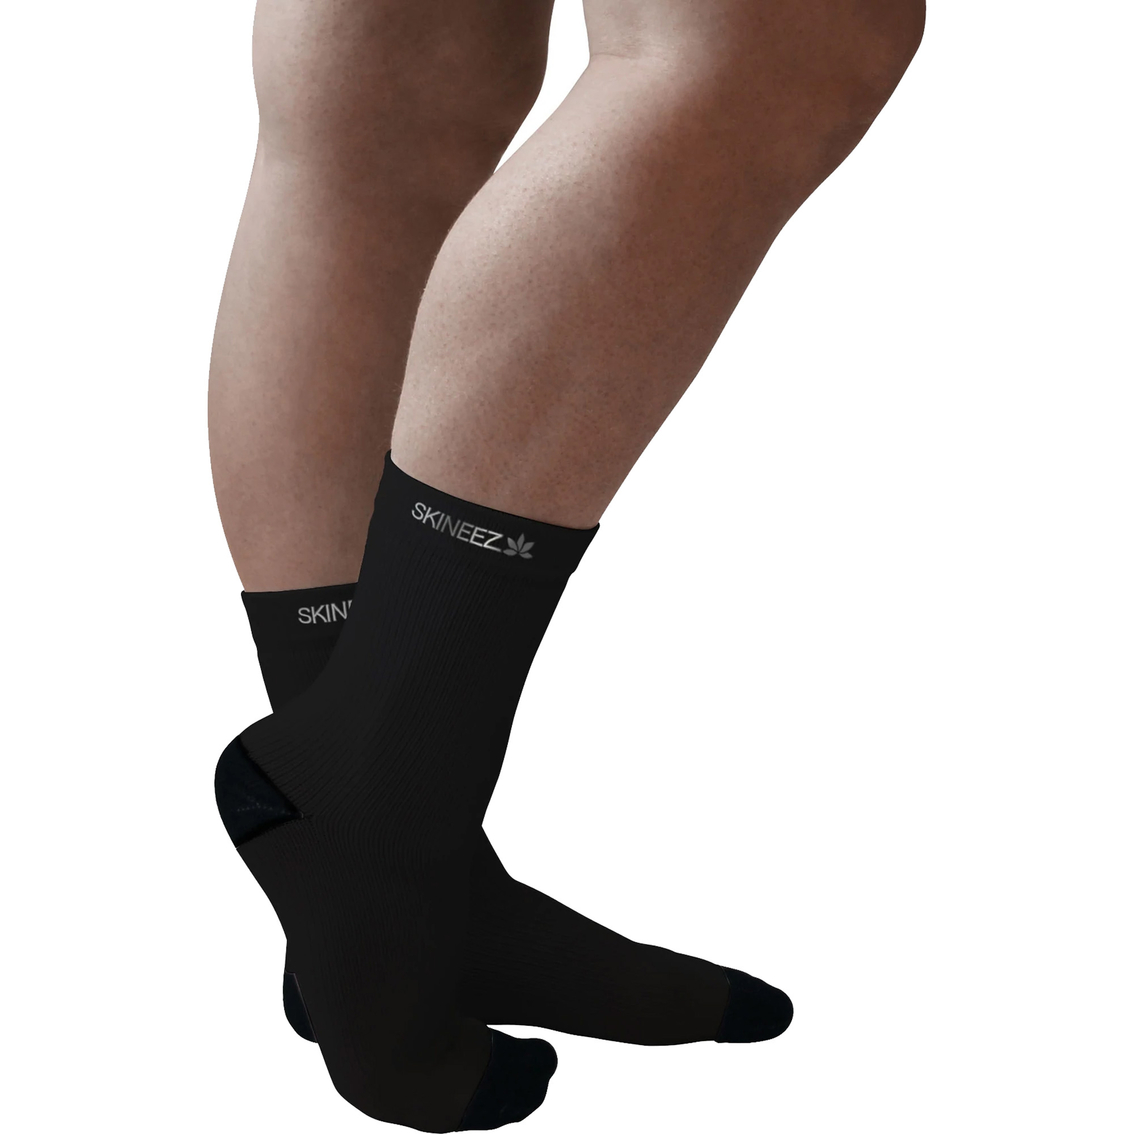 Skineez Skin Reparative Workforce Pro Advanced Healing Compression Crew Socks - Image 2 of 2